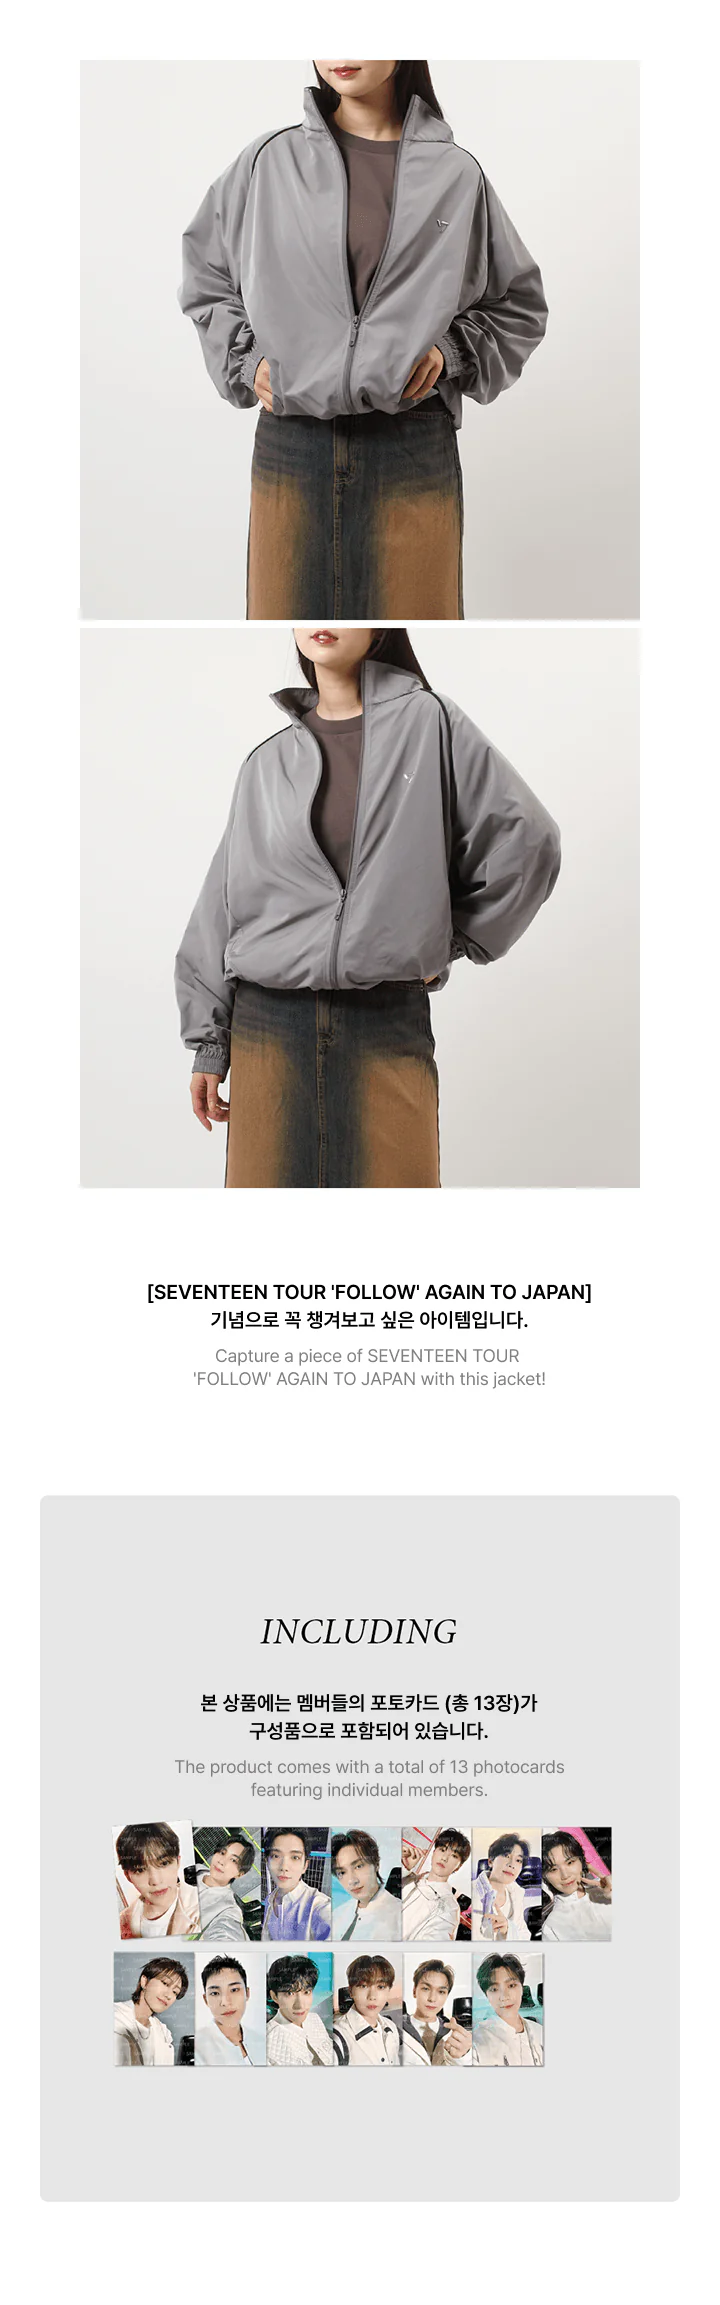 Seventeen - Tour Follow' Again to Japan Official MD UV Cut Jacket 